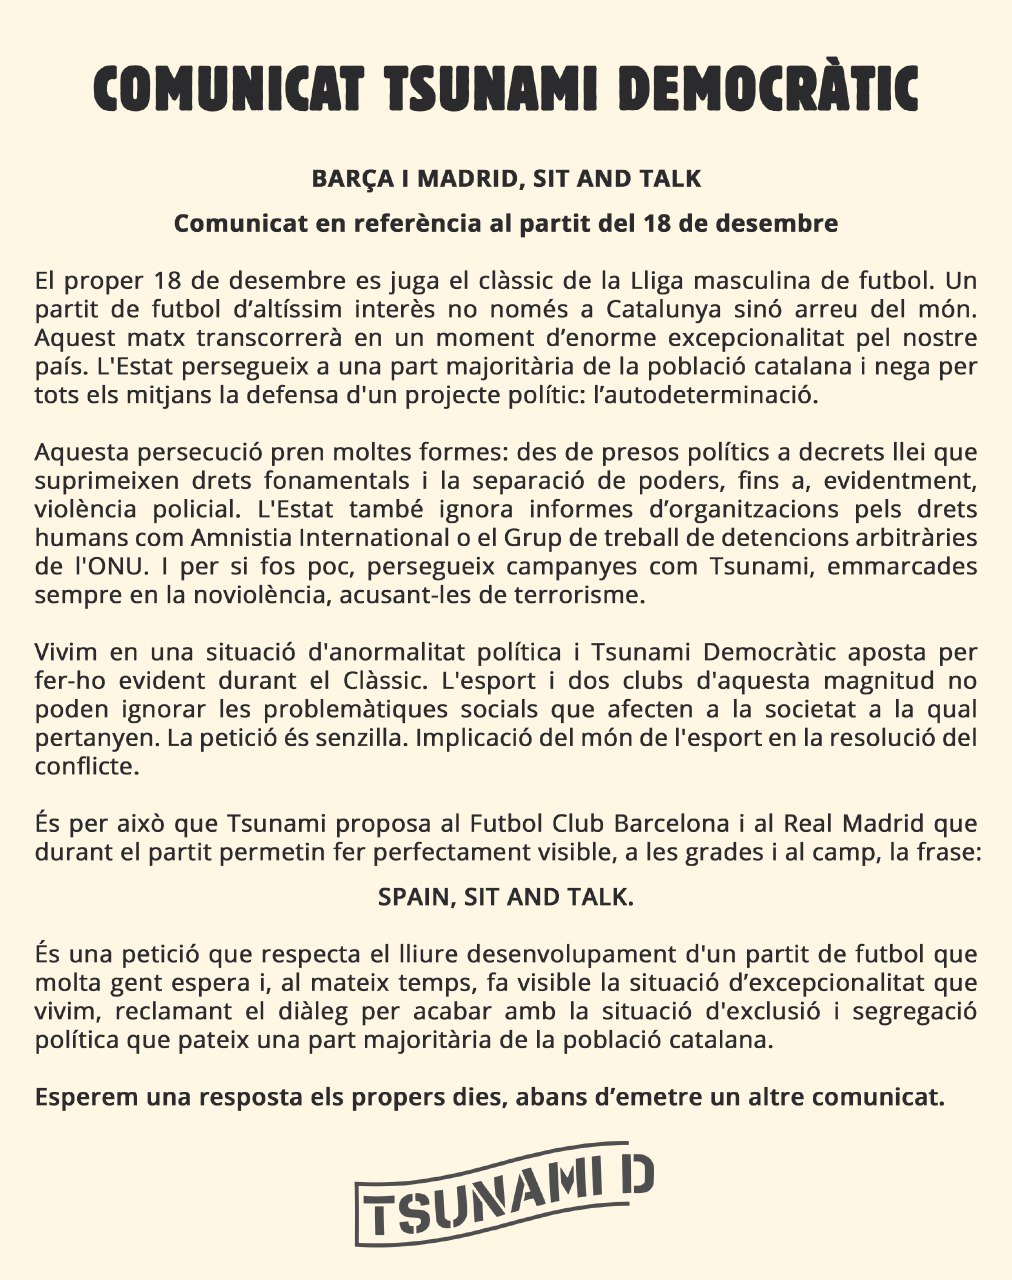 TSUNAMI DEMOCRATIC BARCA MADRID